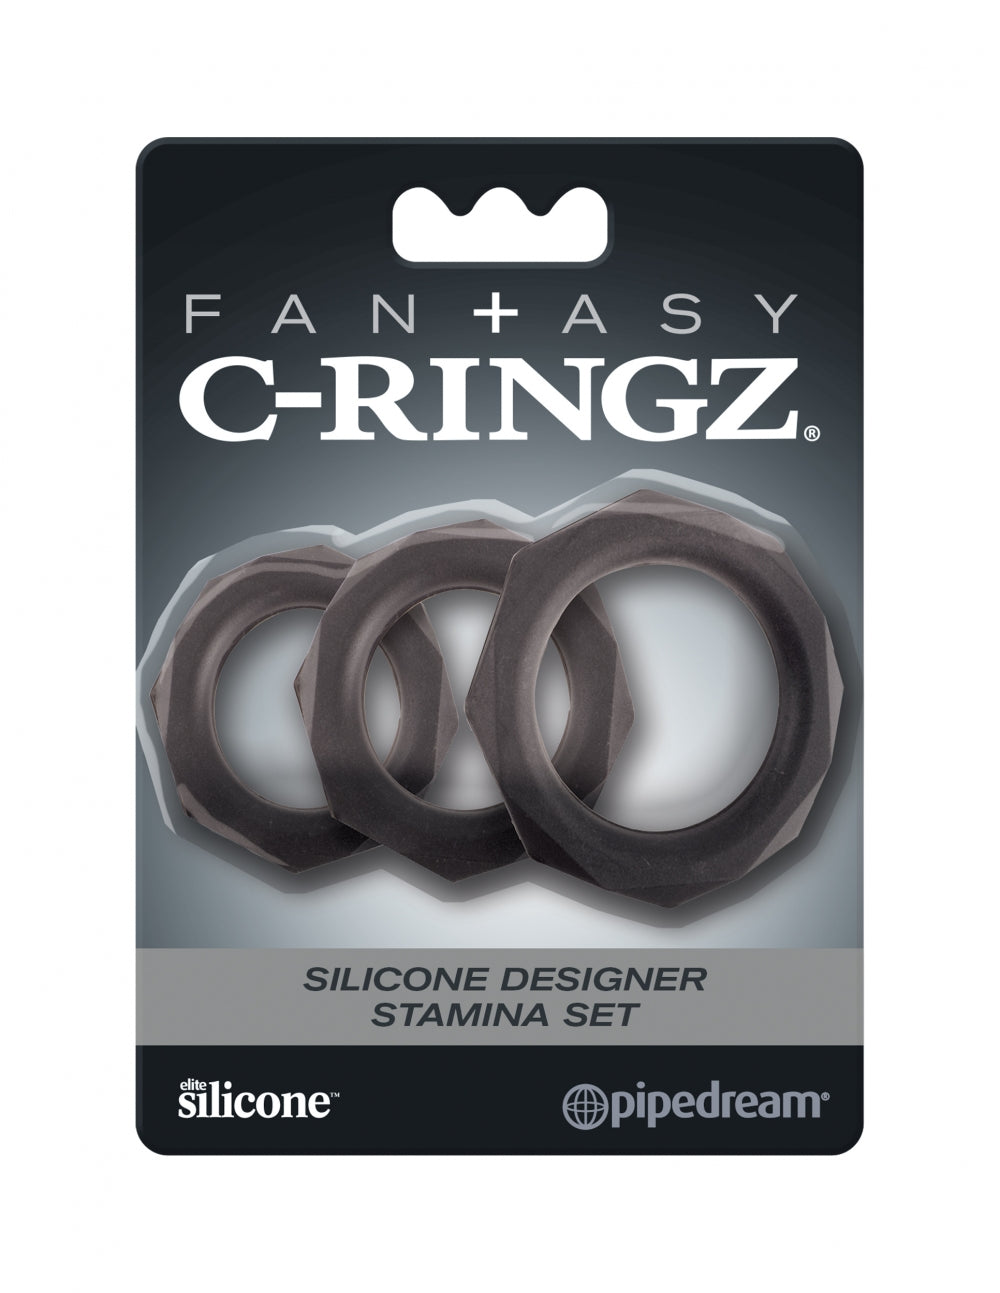 Fantasy C-Ringz Silicone Designer Stamina Set